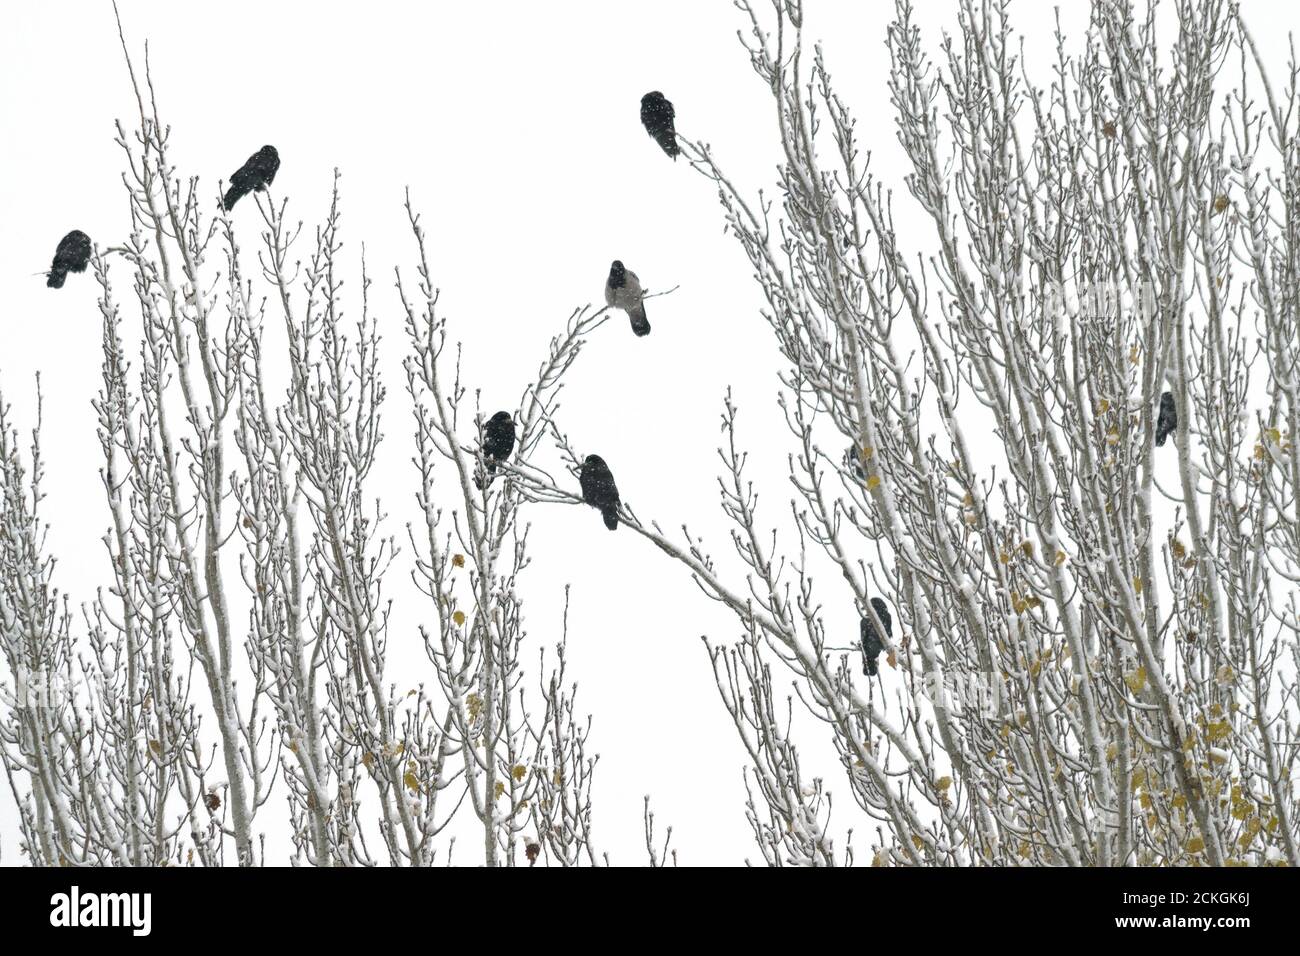 Gli uccelli neri si siedono sui rami degli alberi in inverno, i rami degli alberi sono coperti di neve Foto Stock